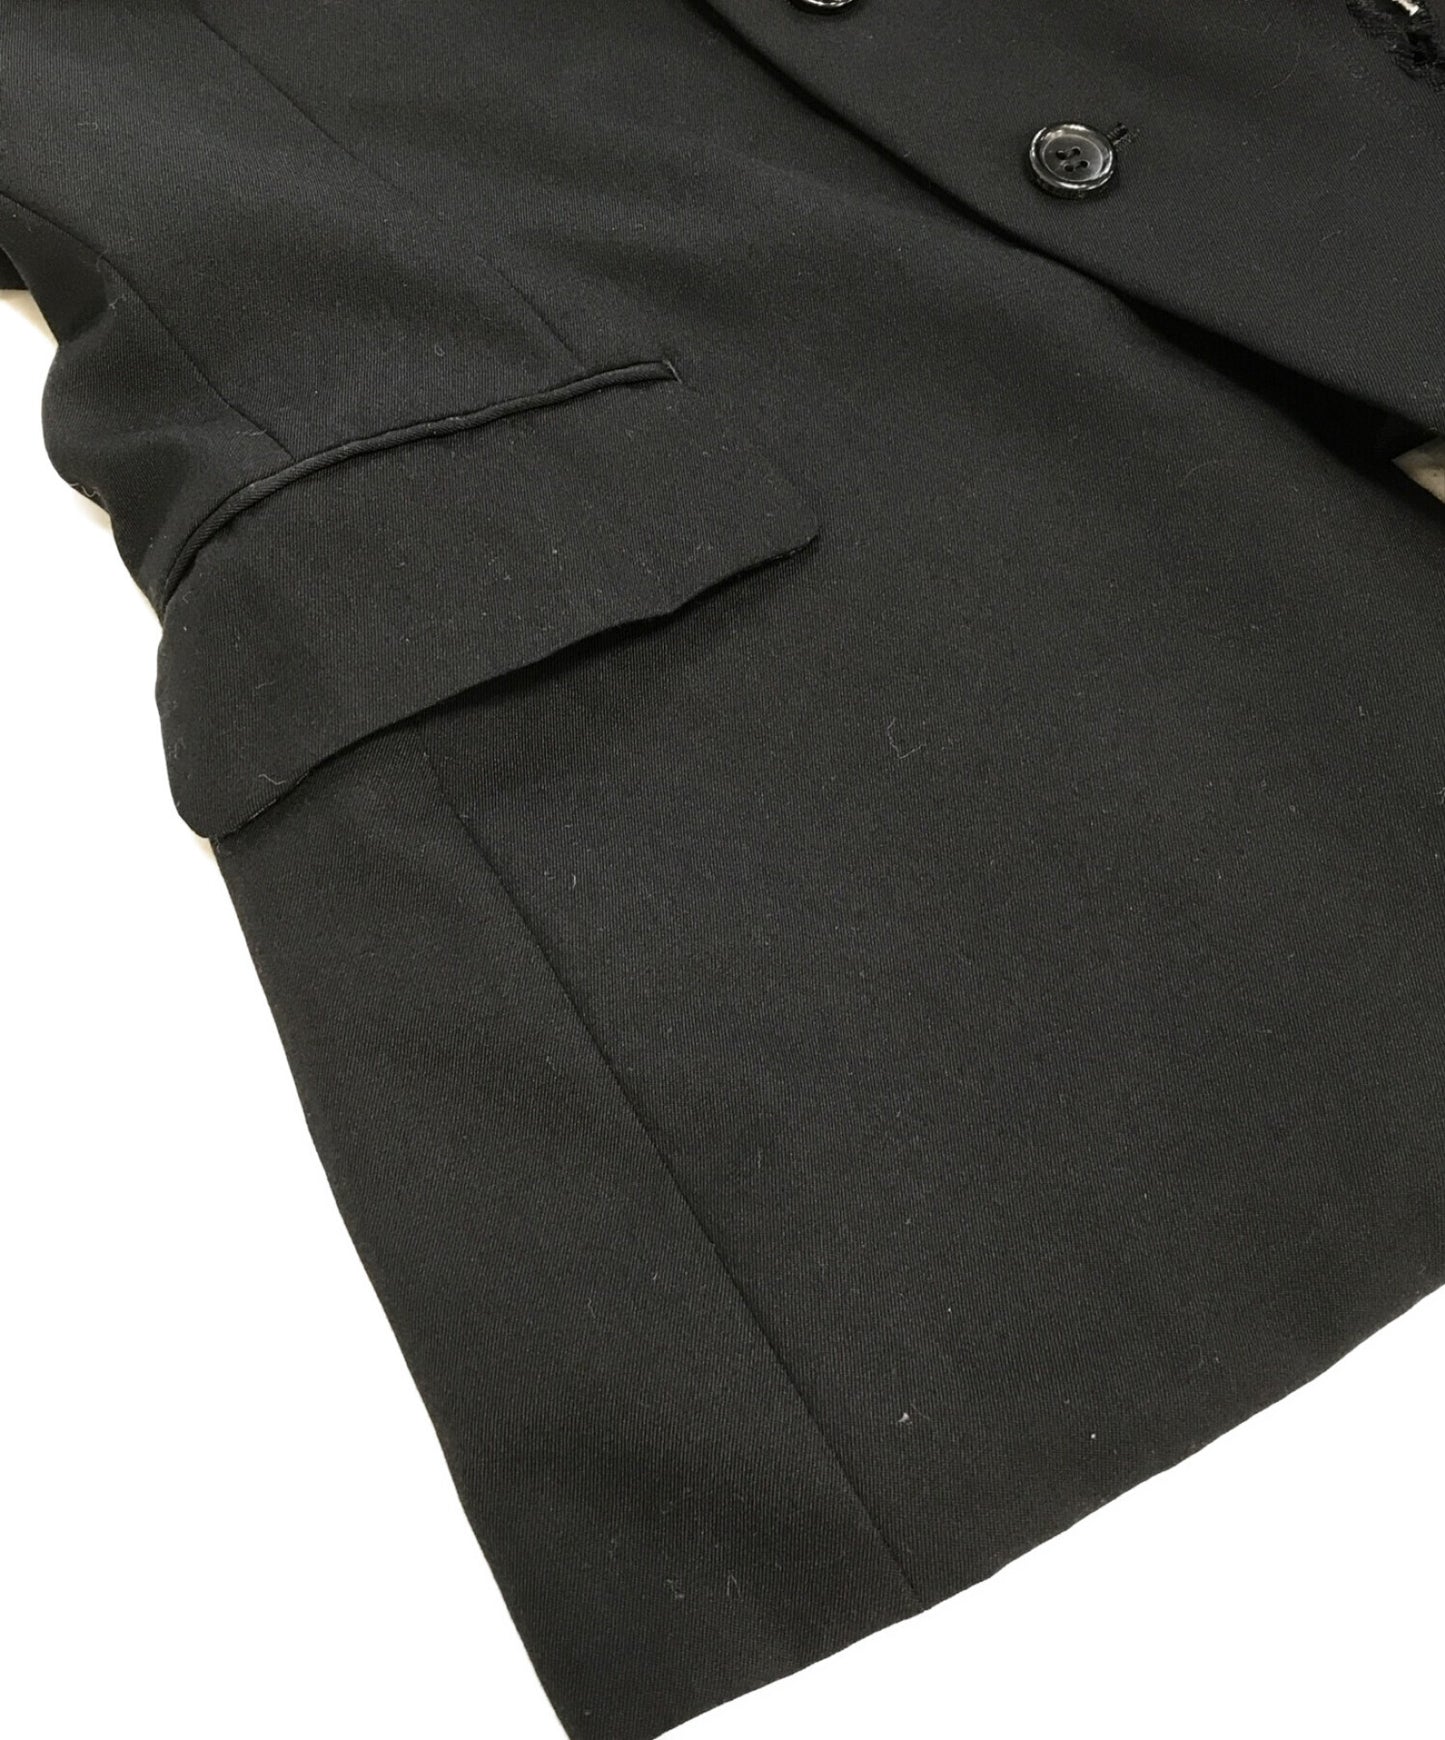 Comme des Garcons Polyester Shrunken Ruffle Tailored Jacket Ga-J001